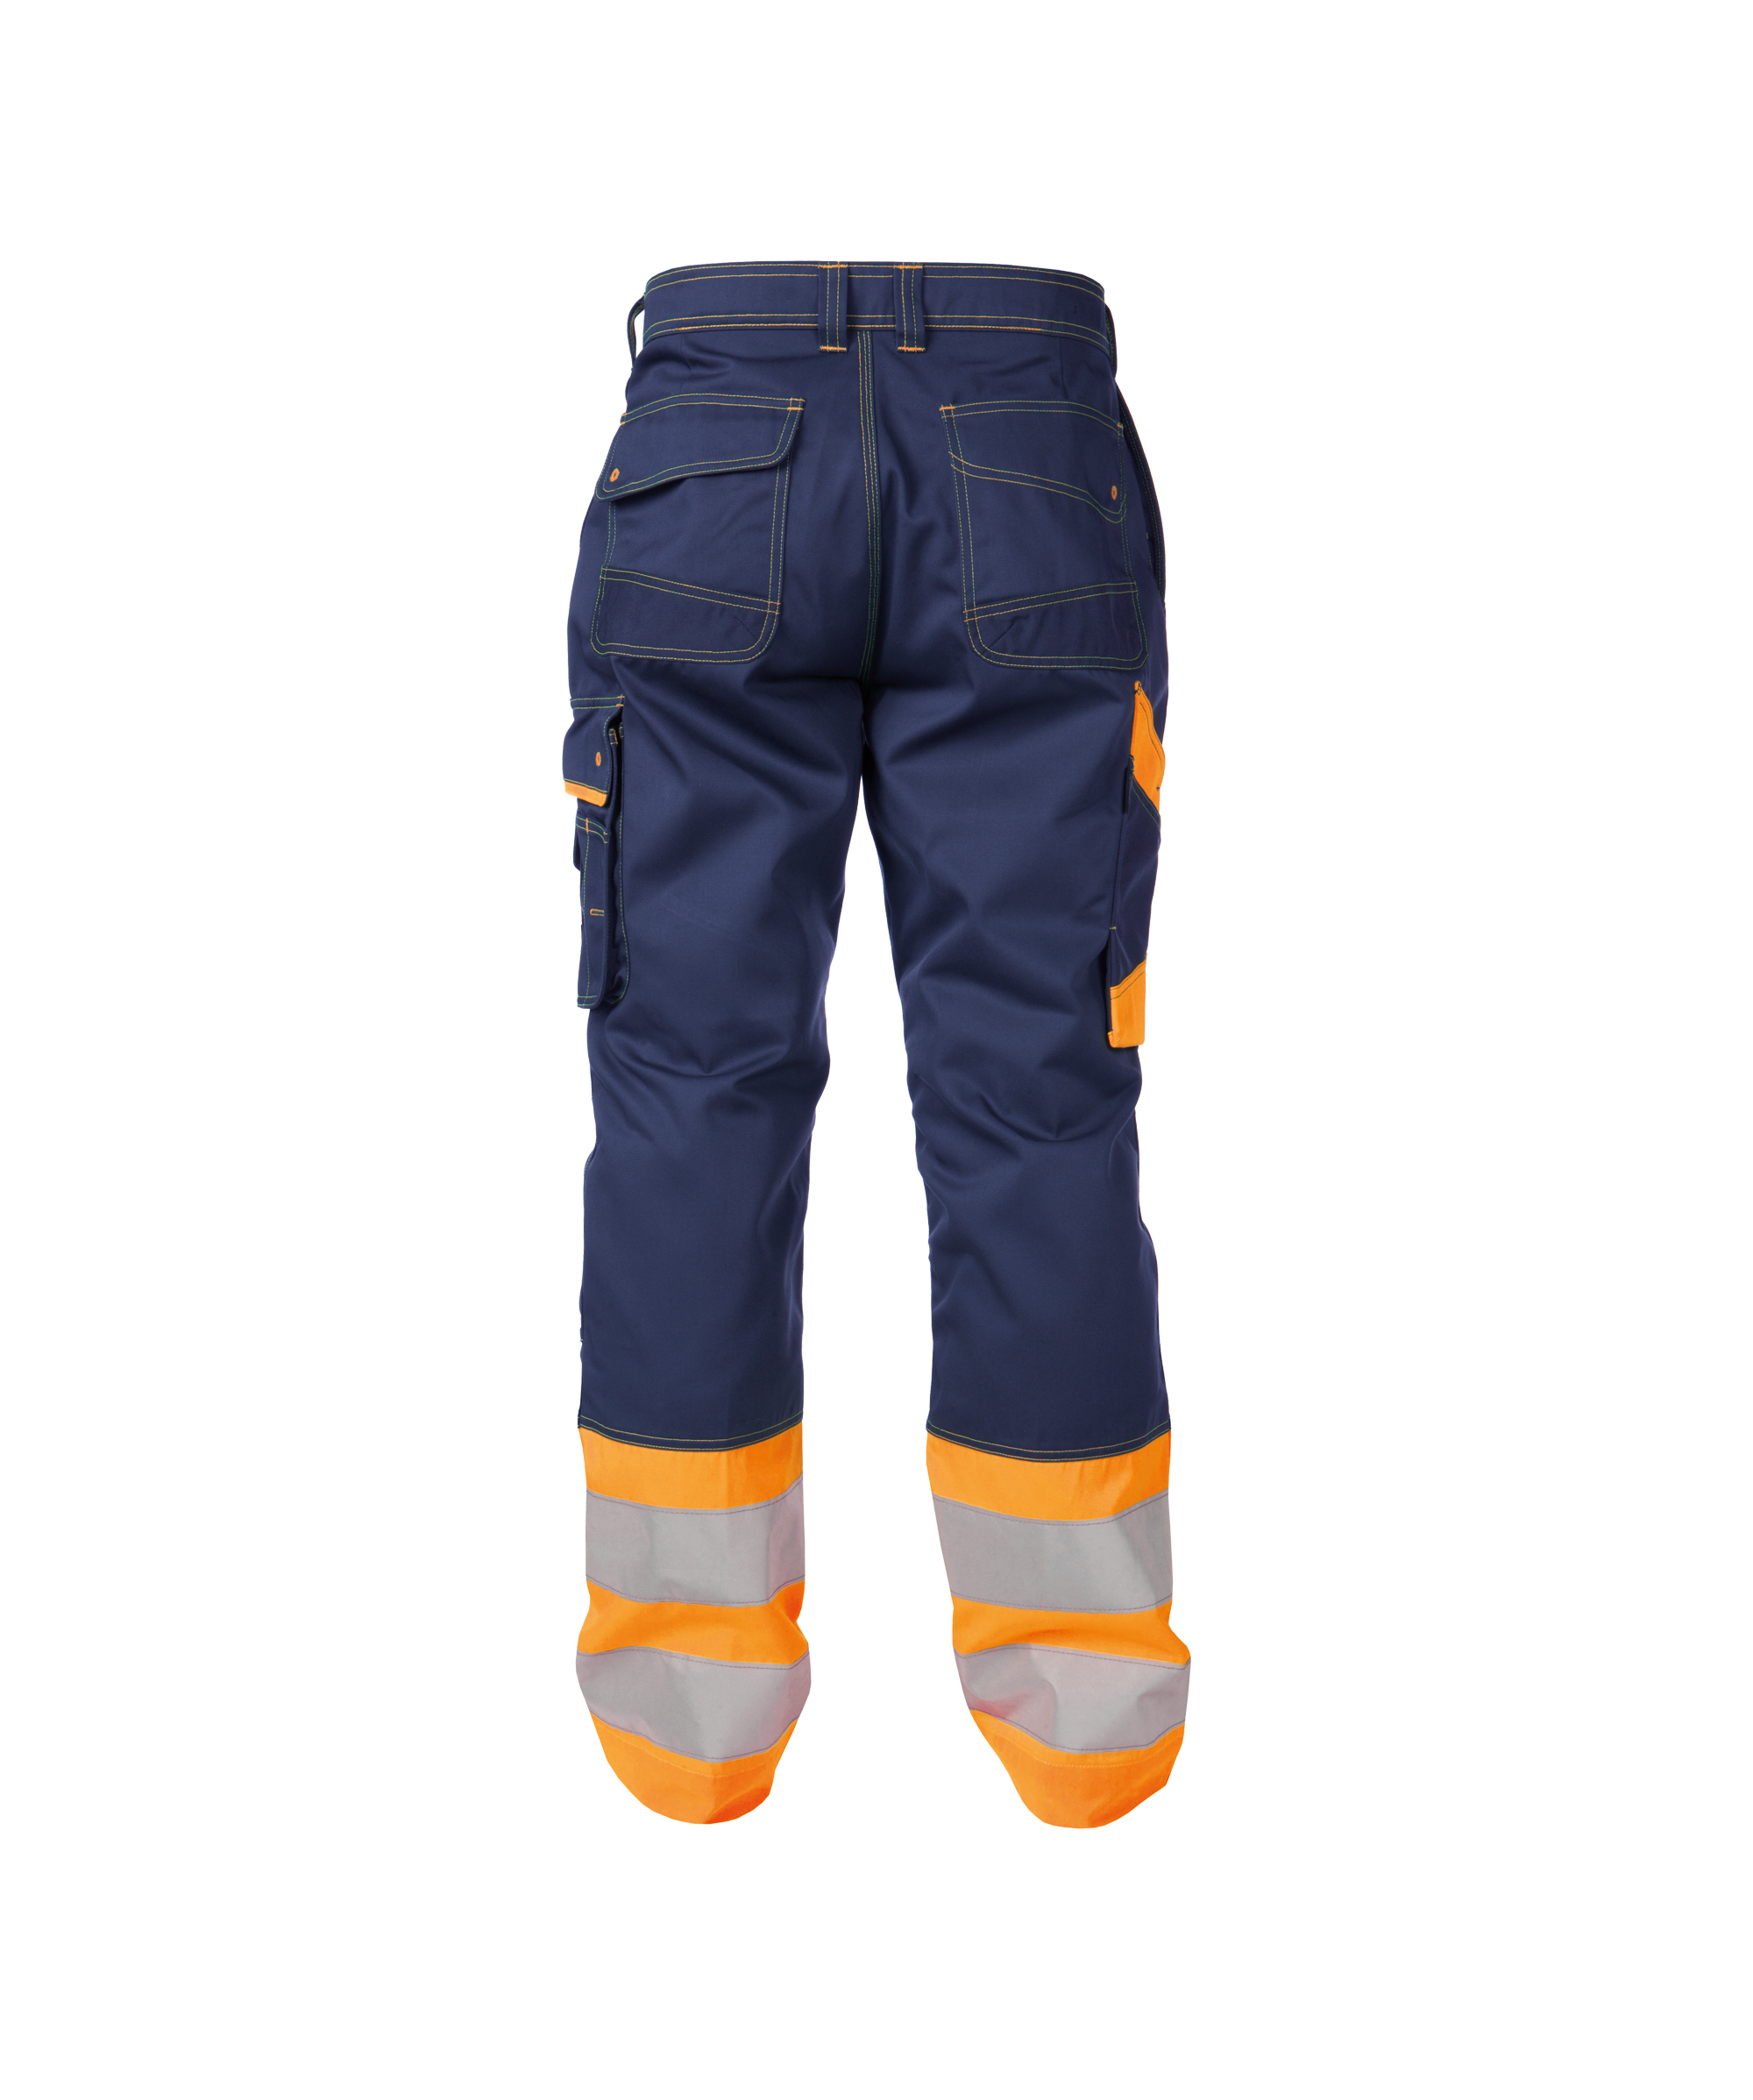 phoenix_high-visibility-work-trousers_navy-fluo-orange_back.jpg